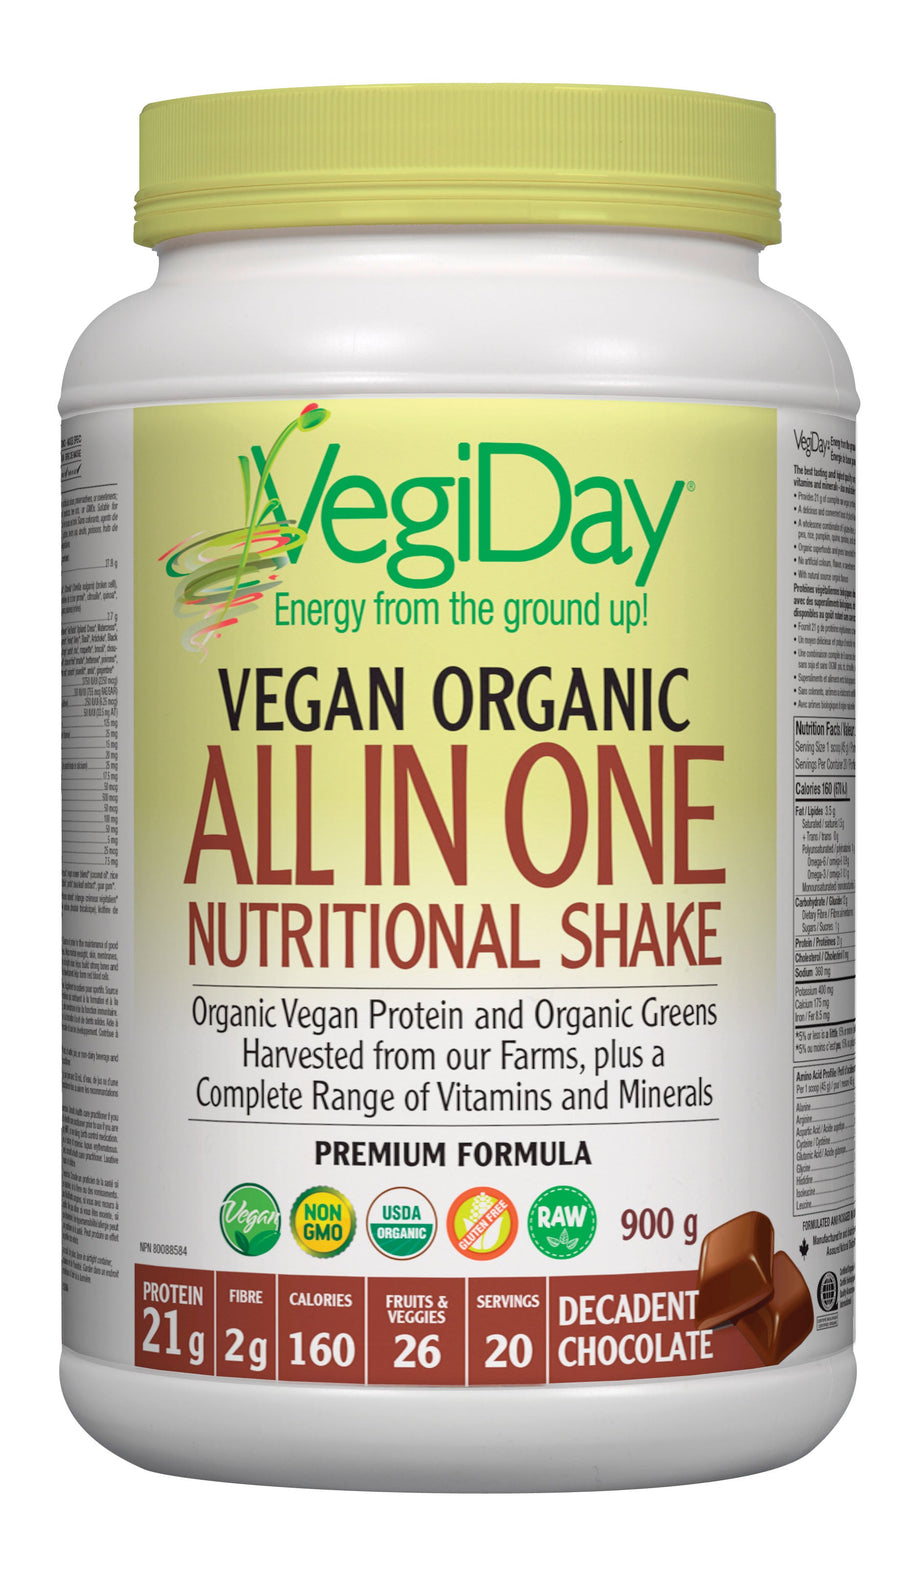 VegiDay Vegan Organic ALL IN ONE Nutritional Shake powder